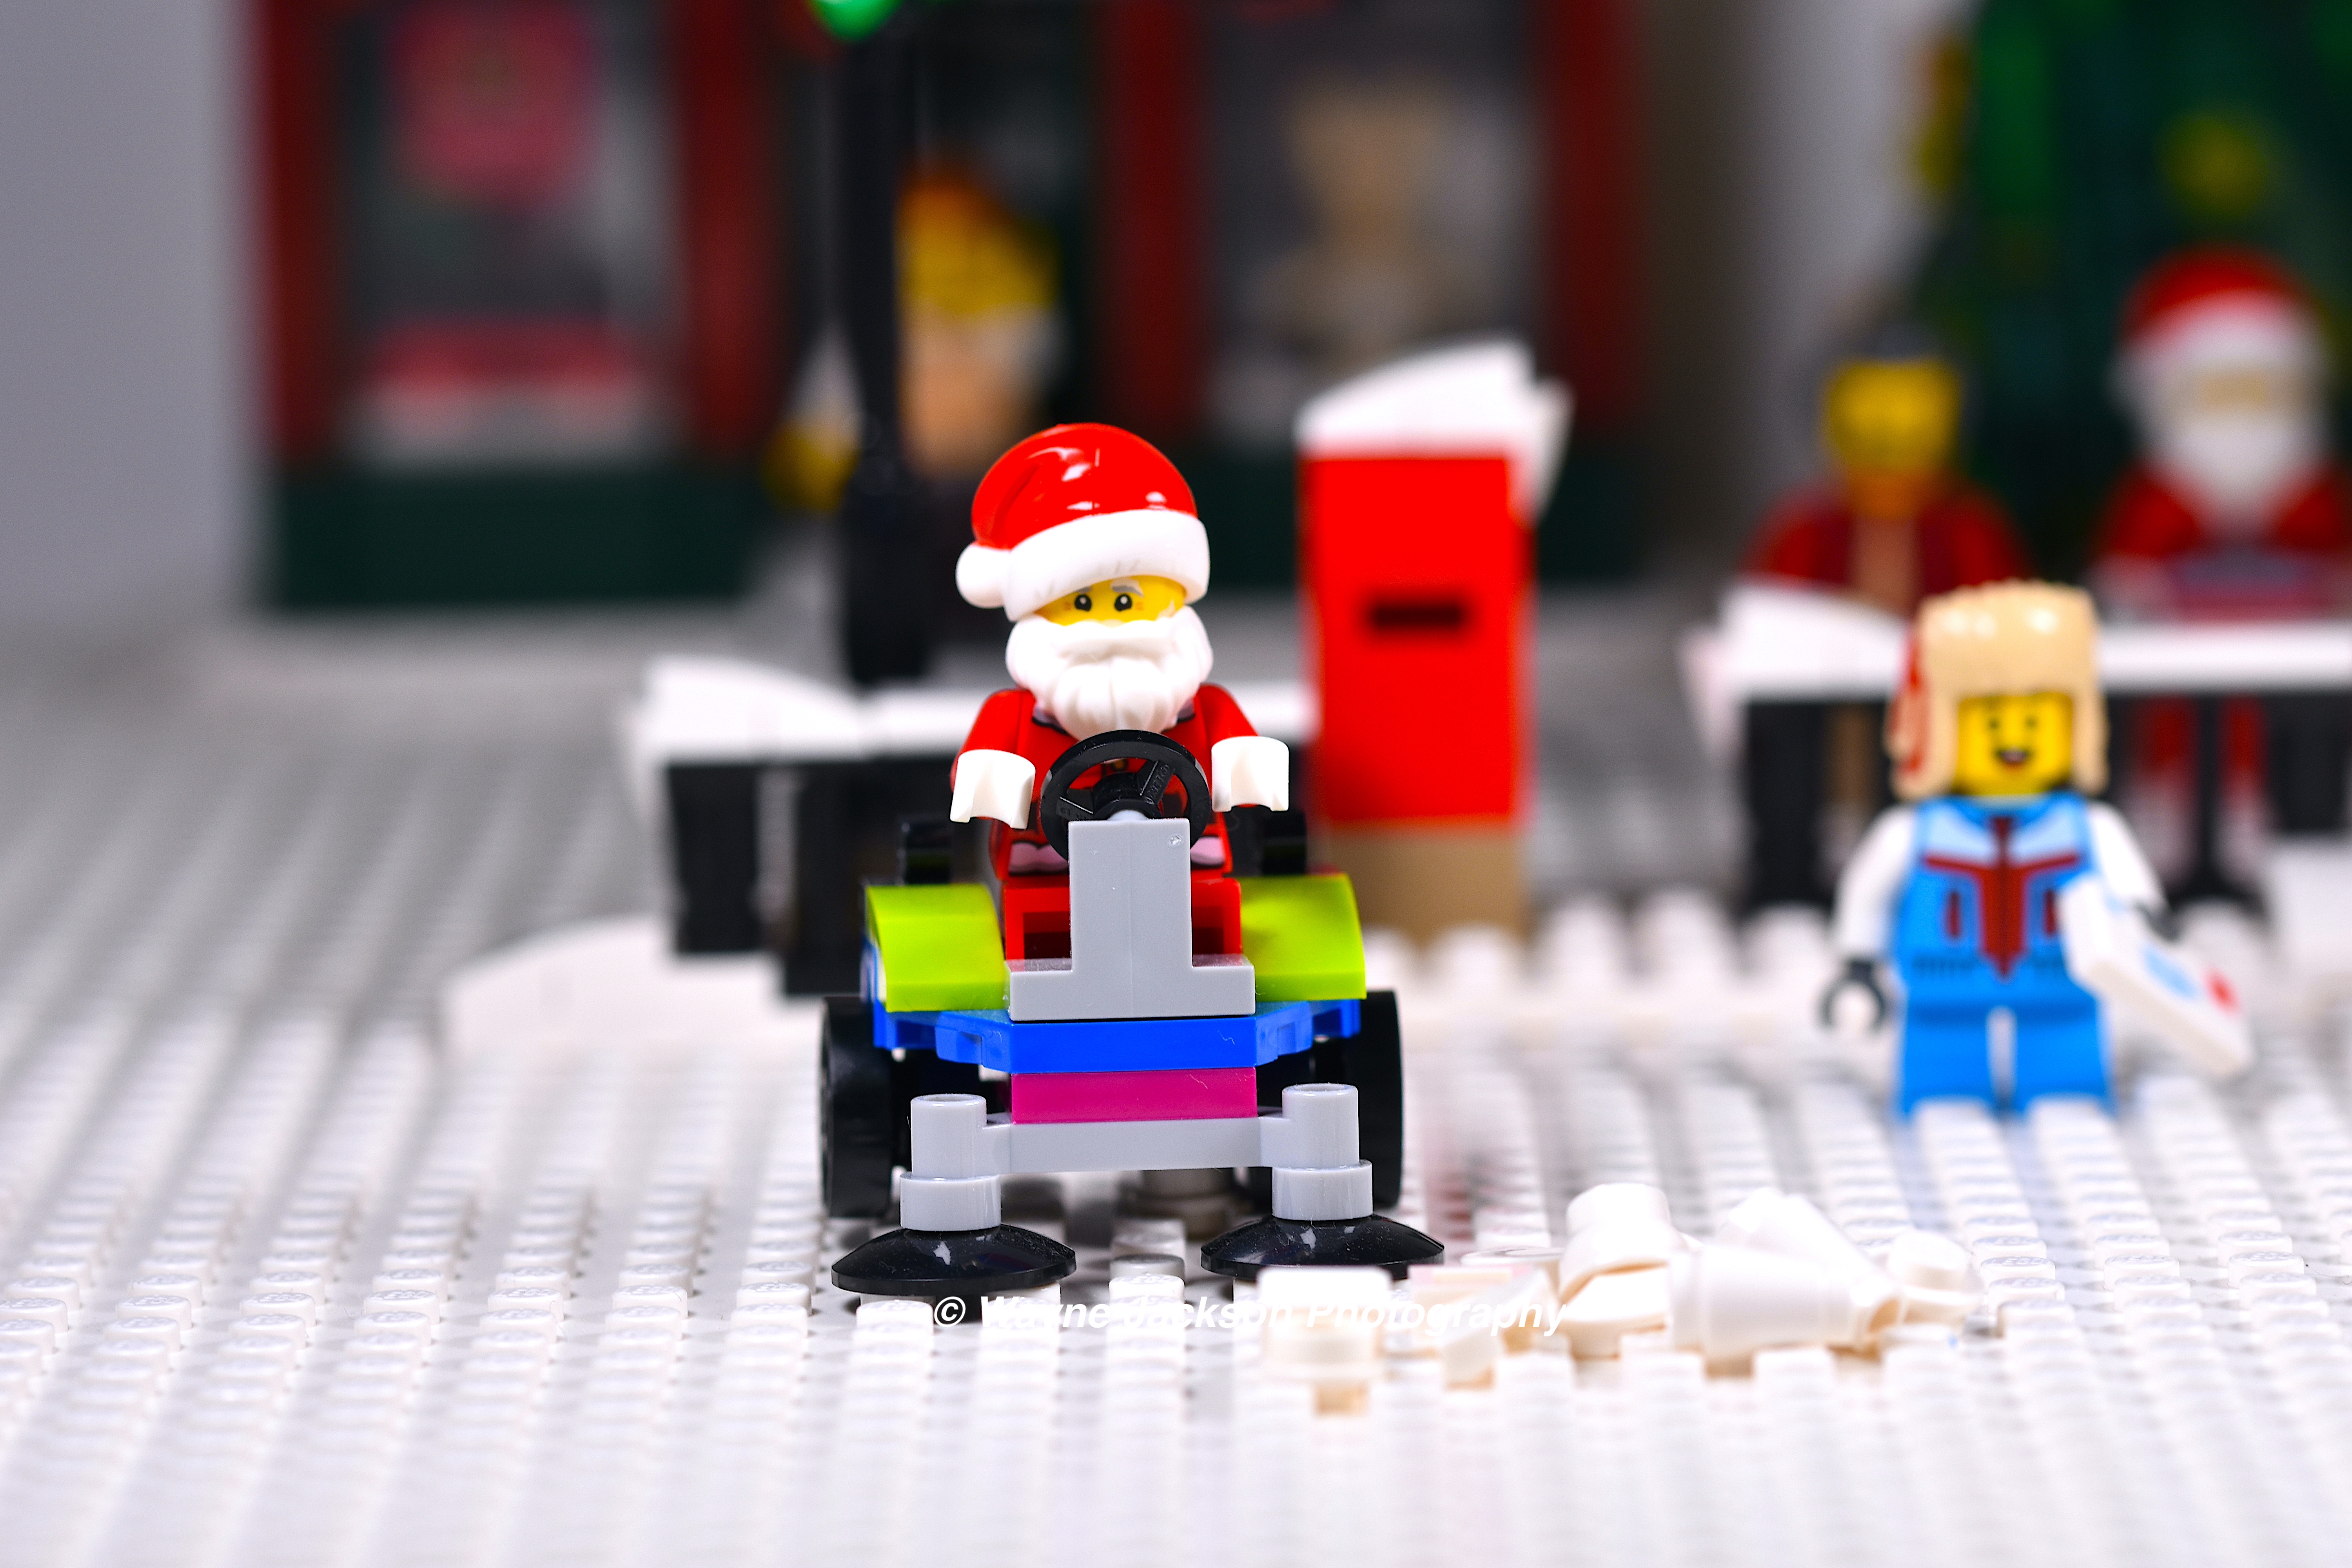 Lego Santa minifigure clearing the snow